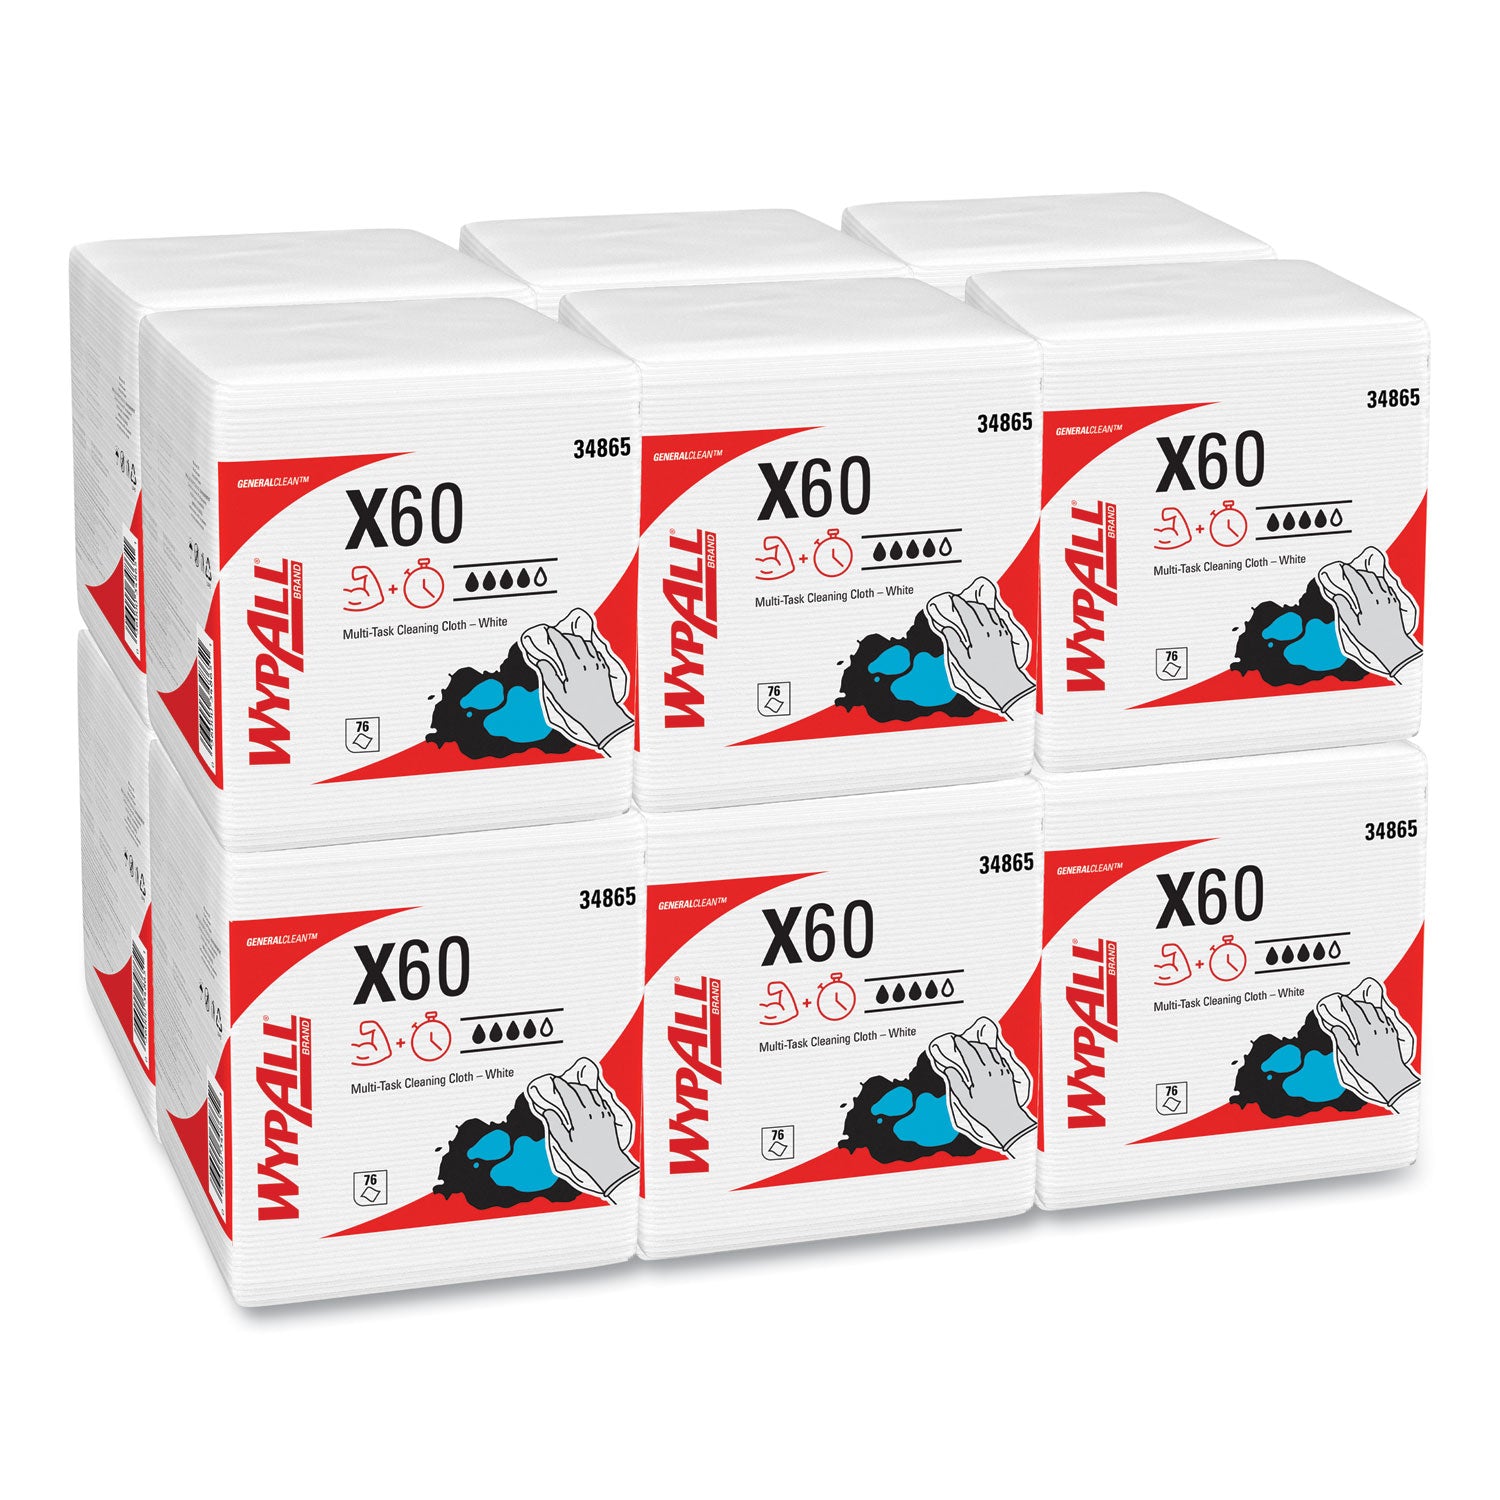 General Clean X60 Cloths, 1/4 Fold, 12.5 x 13, White, 76/Box, 12 Boxes/Carton - 